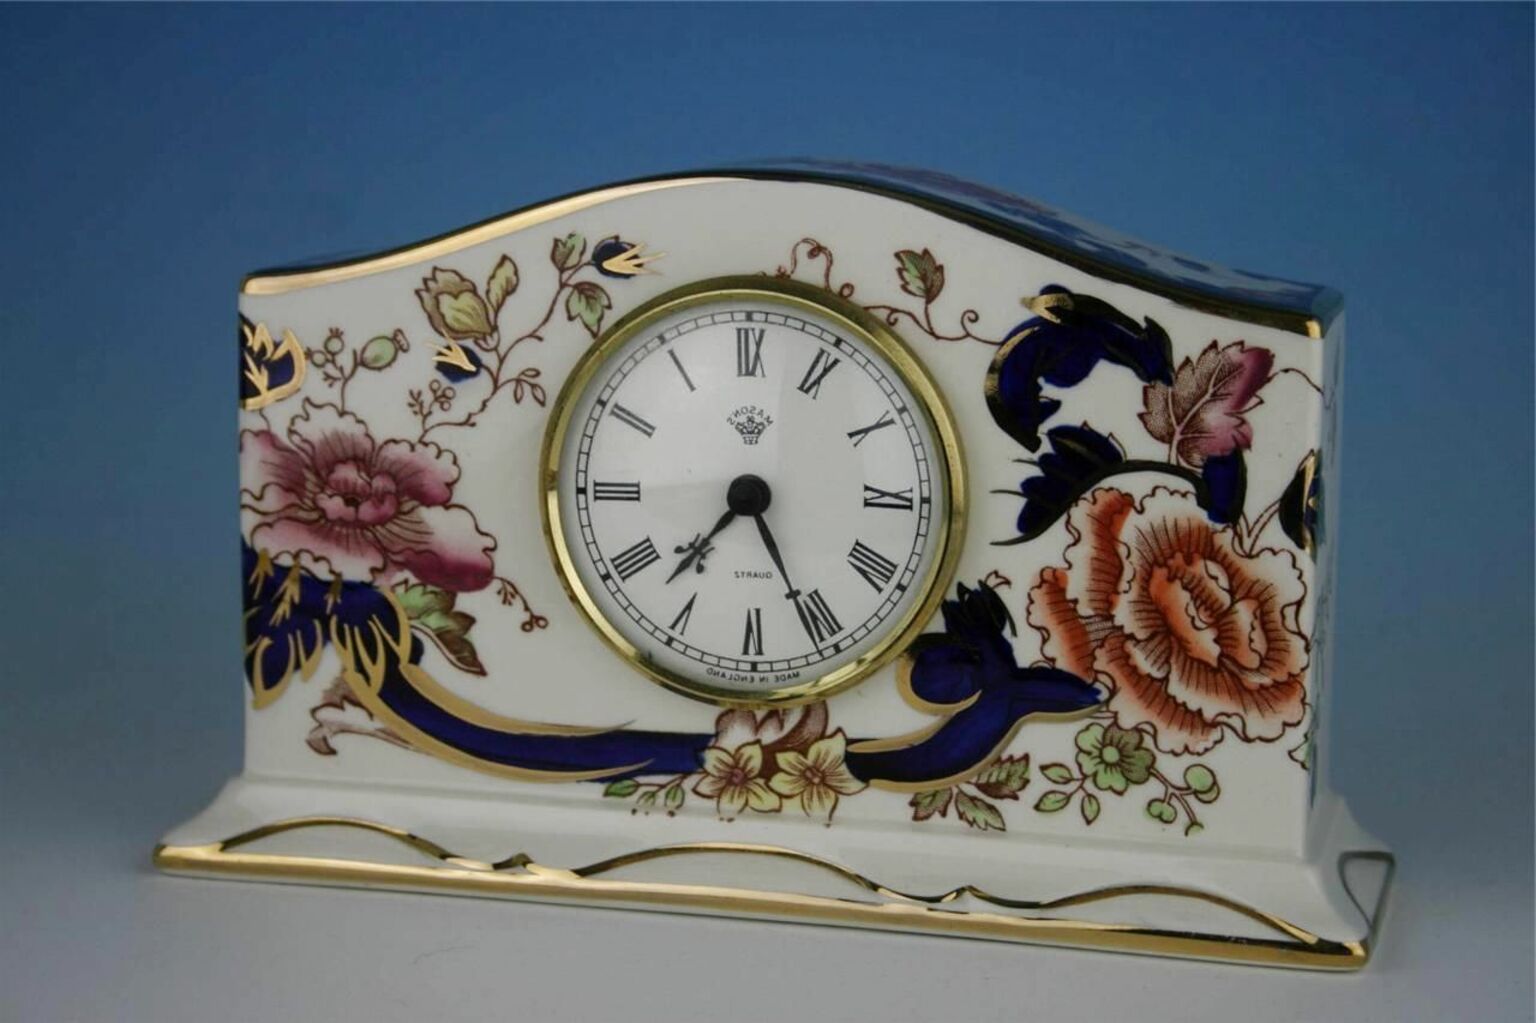 Mason Mandalay Clock for sale in UK | 55 used Mason Mandalay Clocks